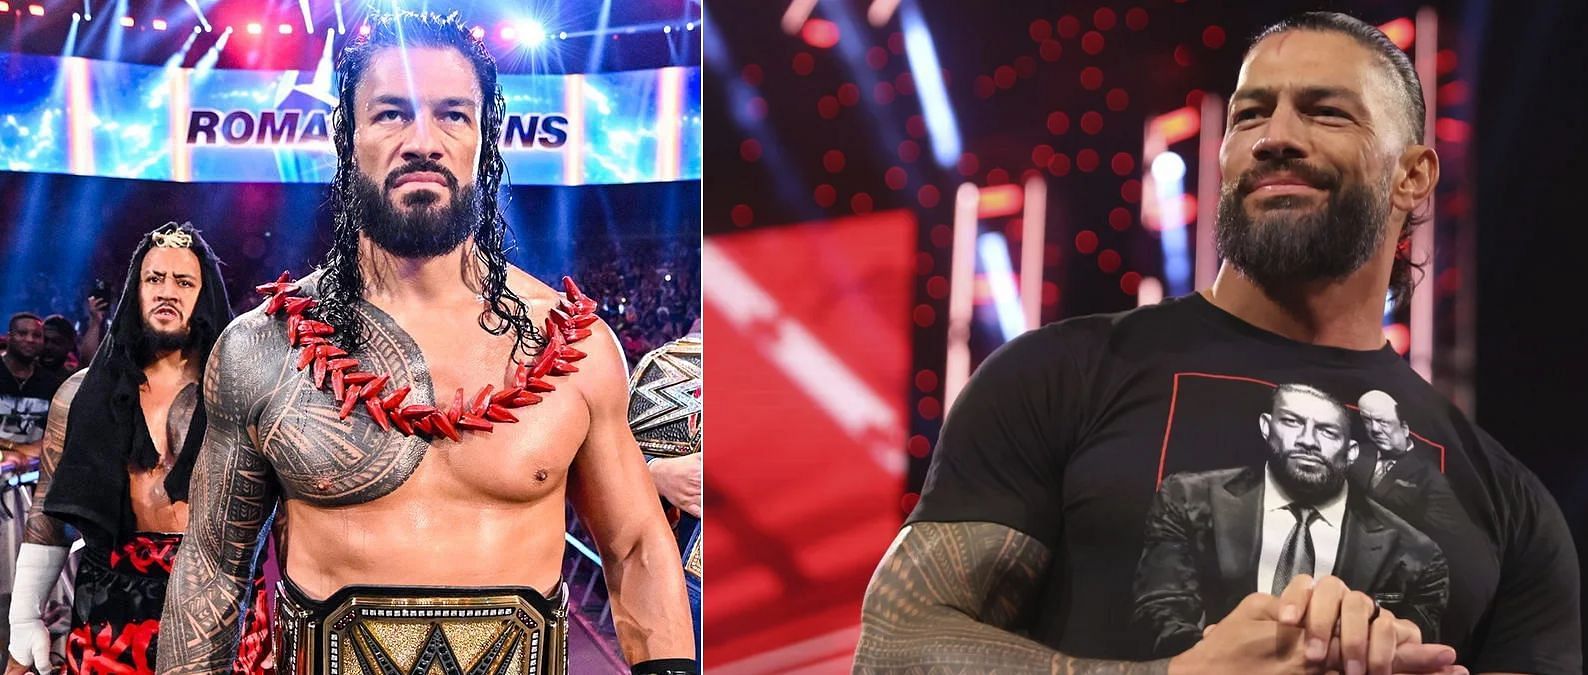 Will Sami Zayn replace Roman Reigns on SmackDown?